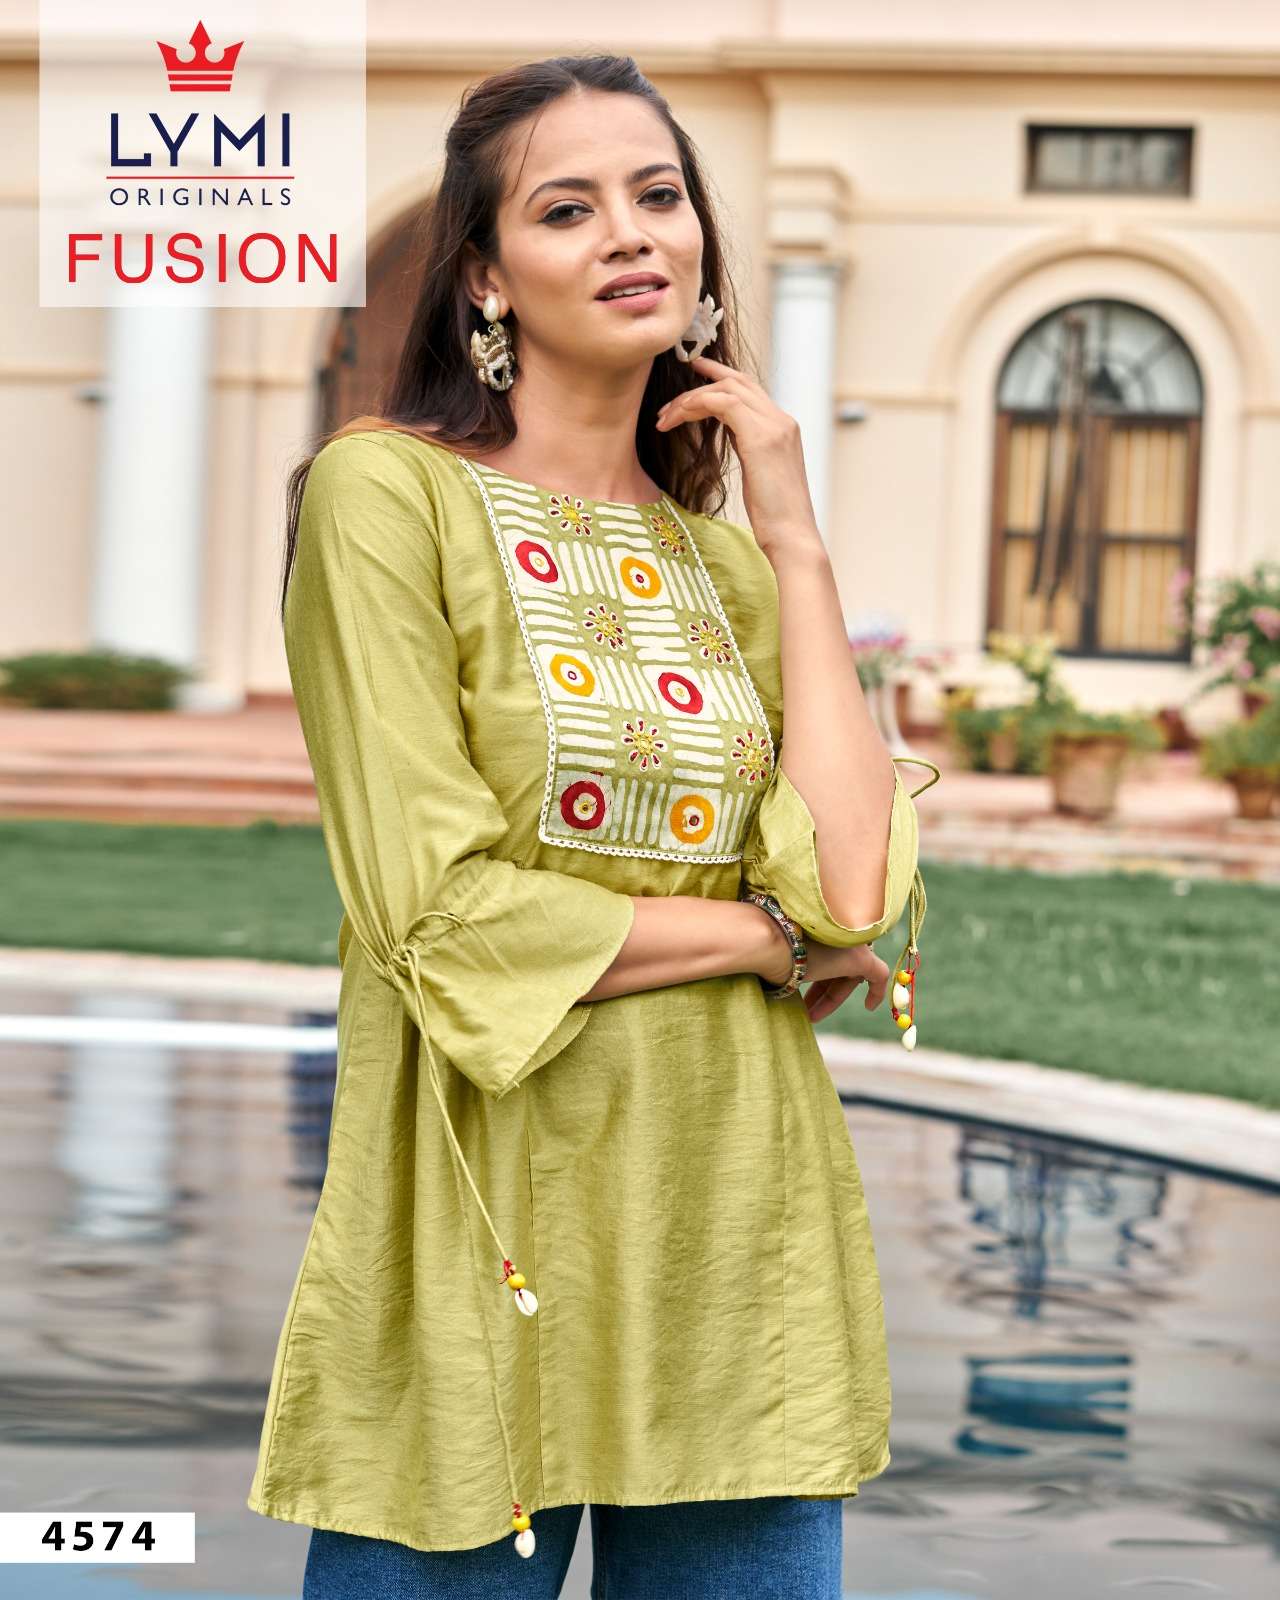 rangoon fusion 4571-4576 series latest fancy short top wholesaler surat gujarat